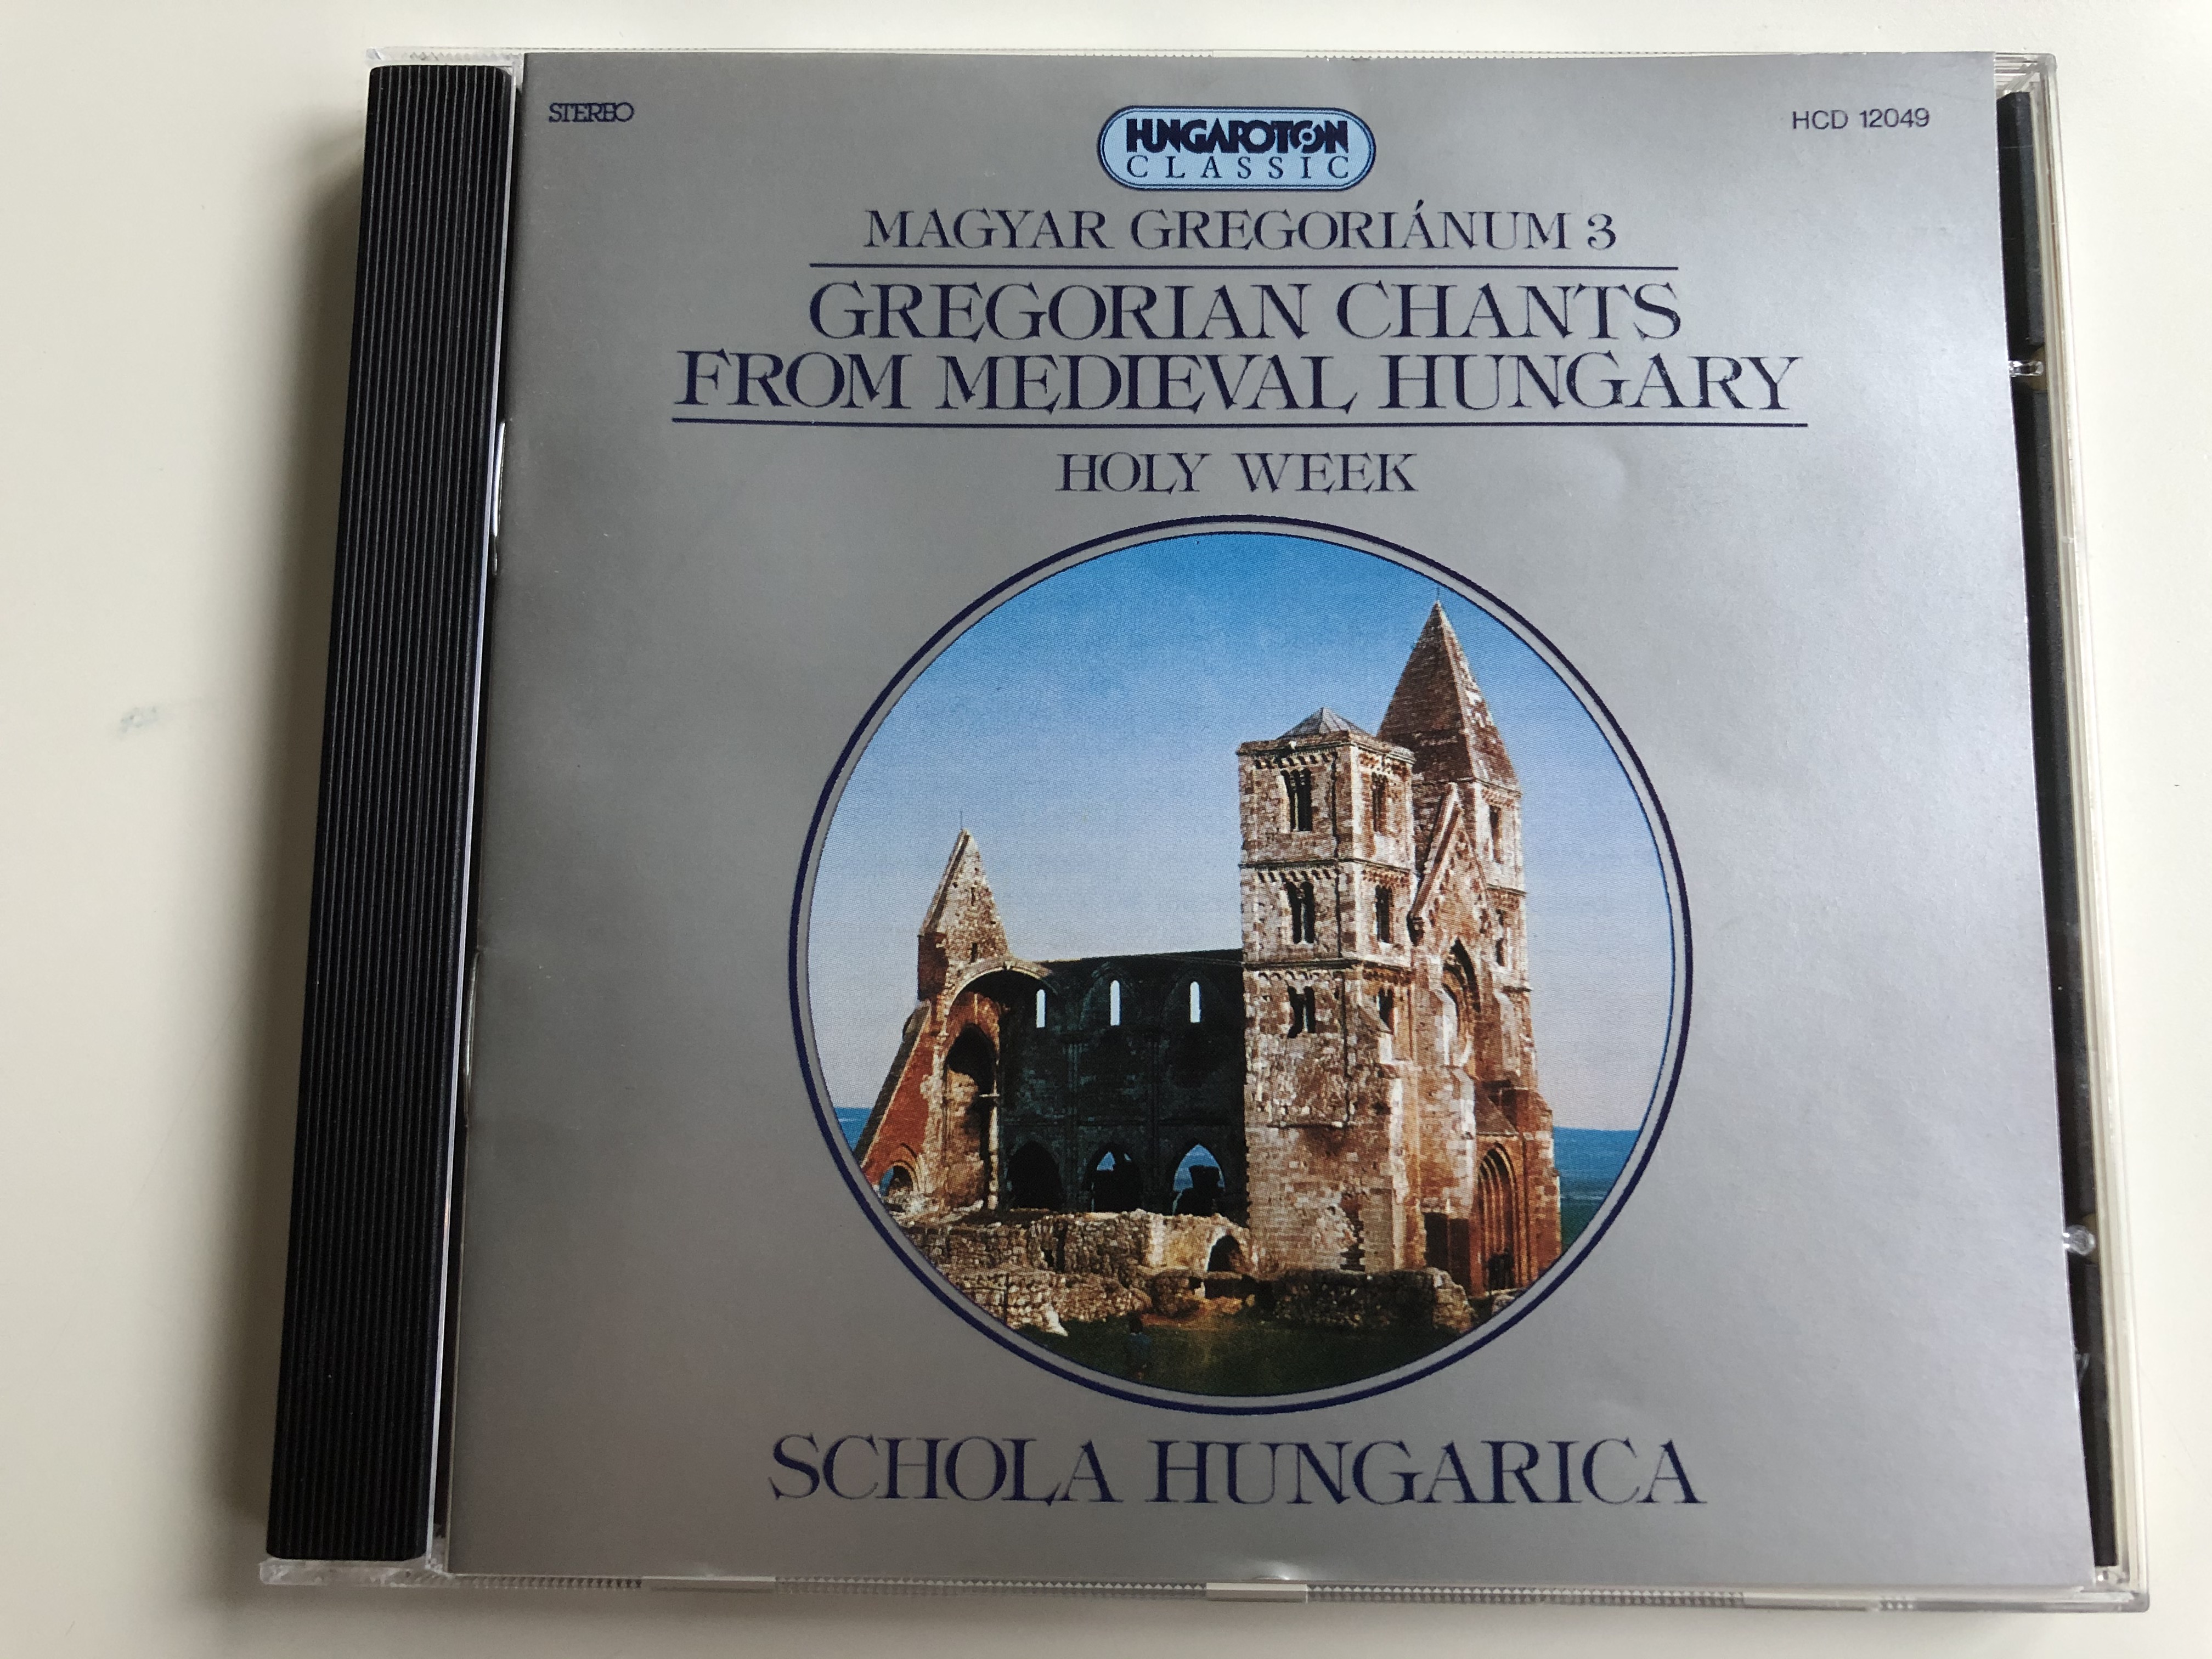 magyar-gregori-num-3-gregorian-chants-from-medieval-hungary-holy-week-schola-hungarica-hungaroton-classic-audio-cd-1994-stereo-hcd-12049-1-.jpg